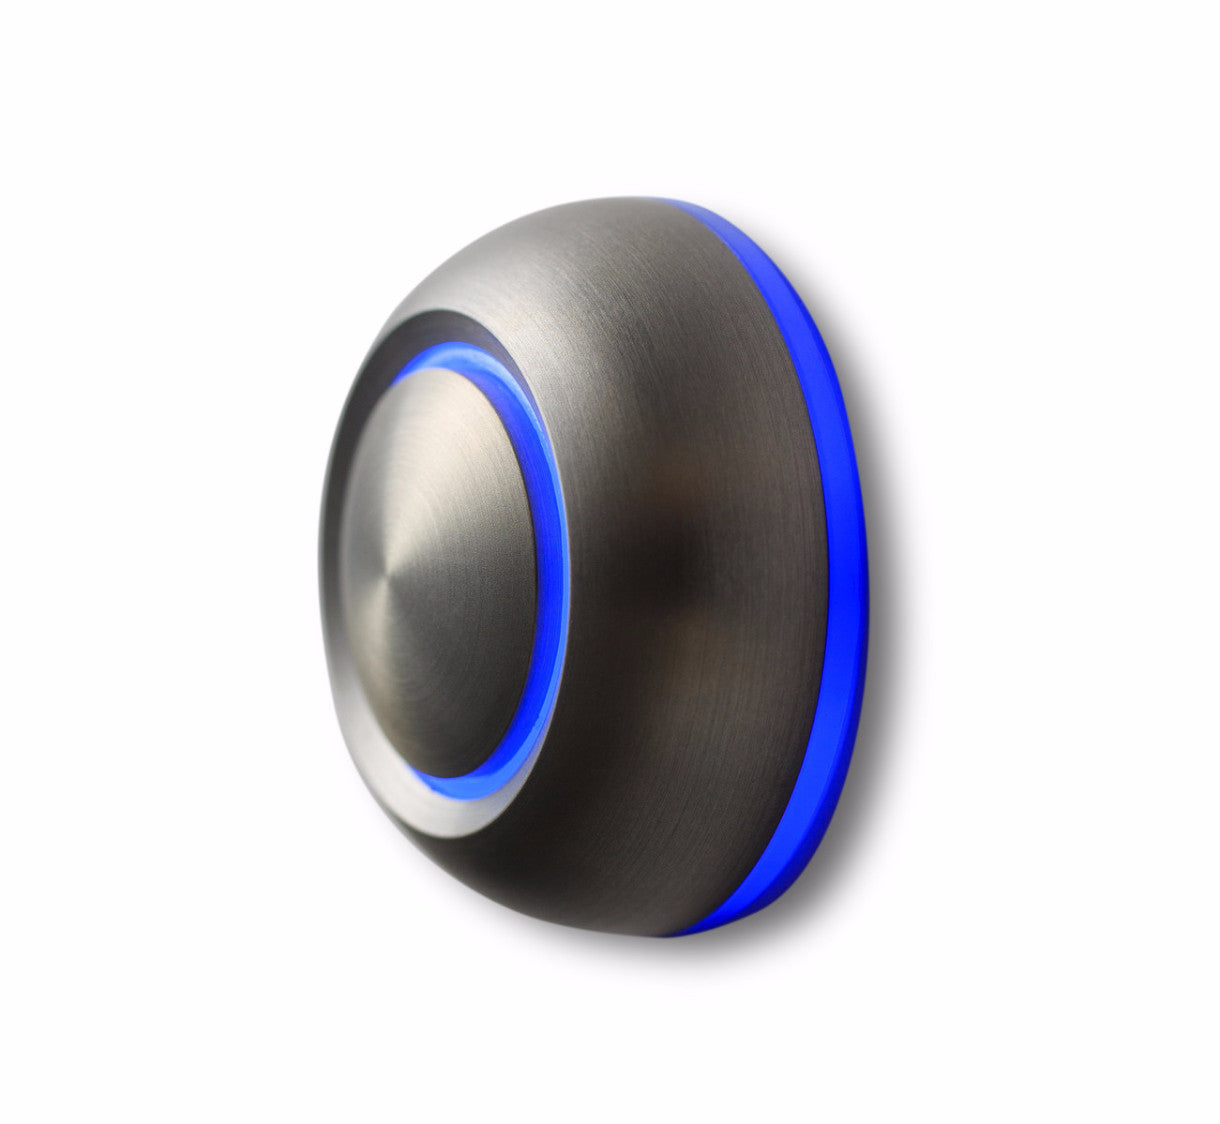 True ALUMINUM Doorbell Button - Spore